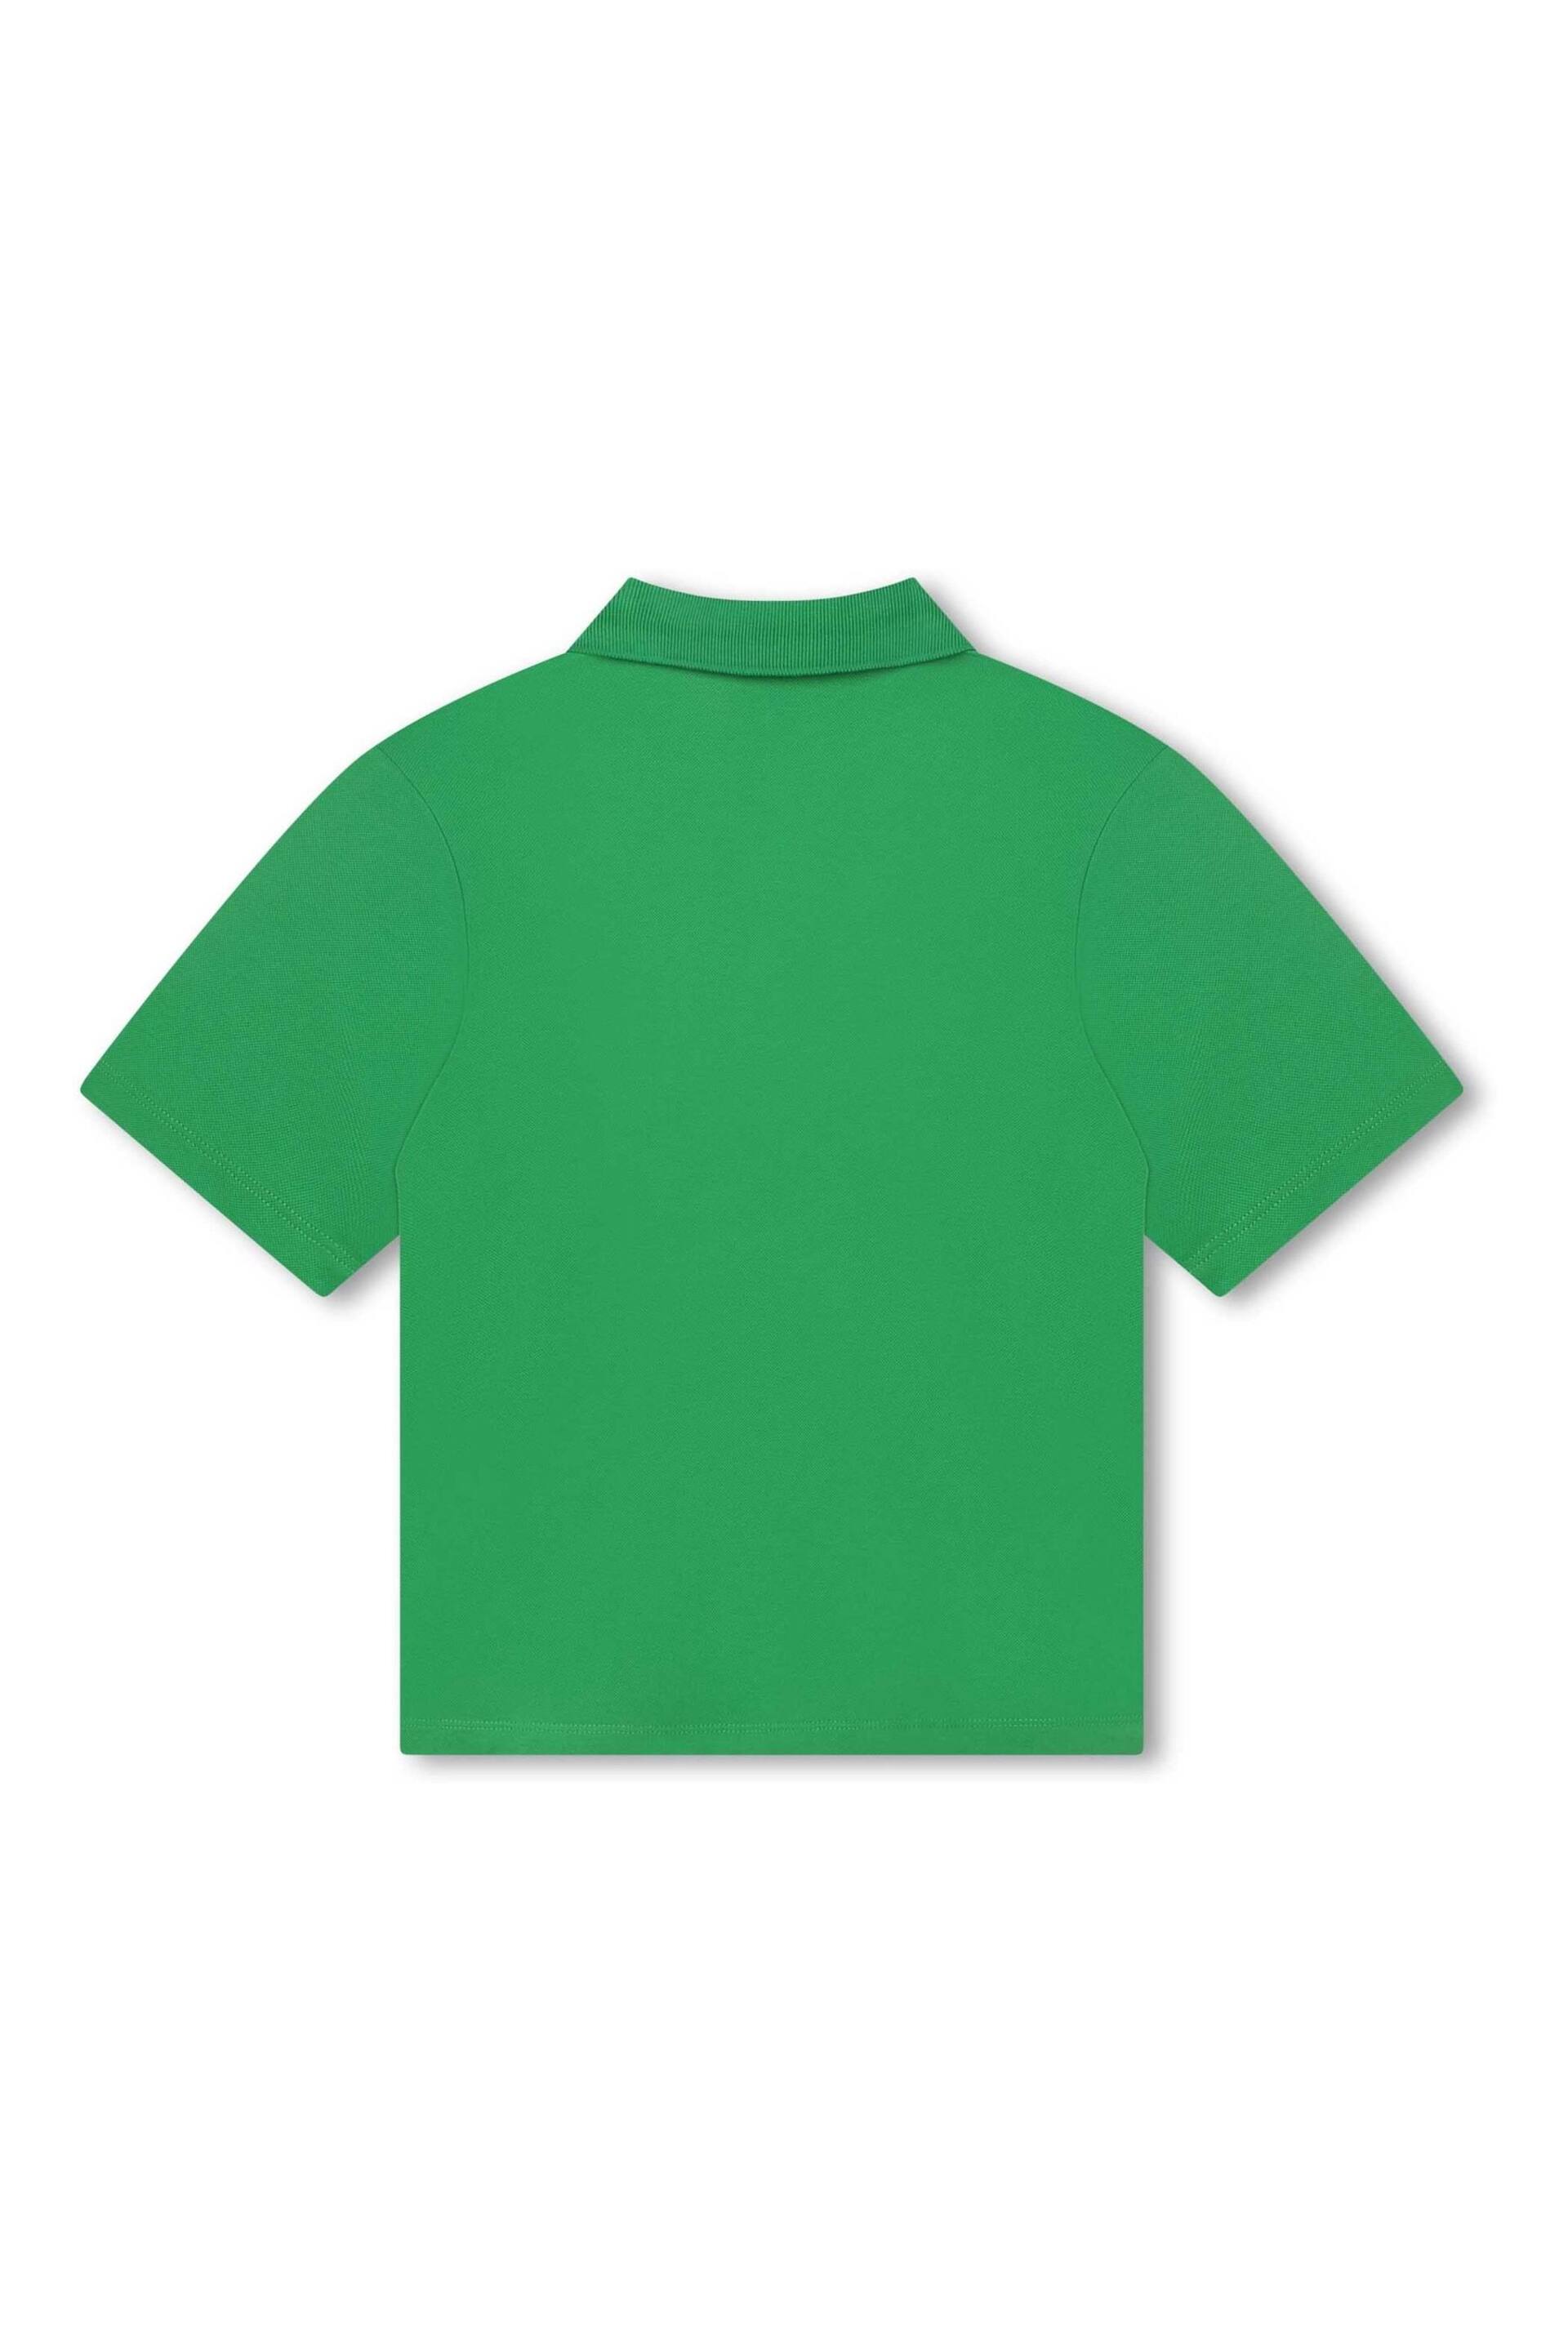 KENZO KIDS Green Logo Poloshirt - Image 4 of 5